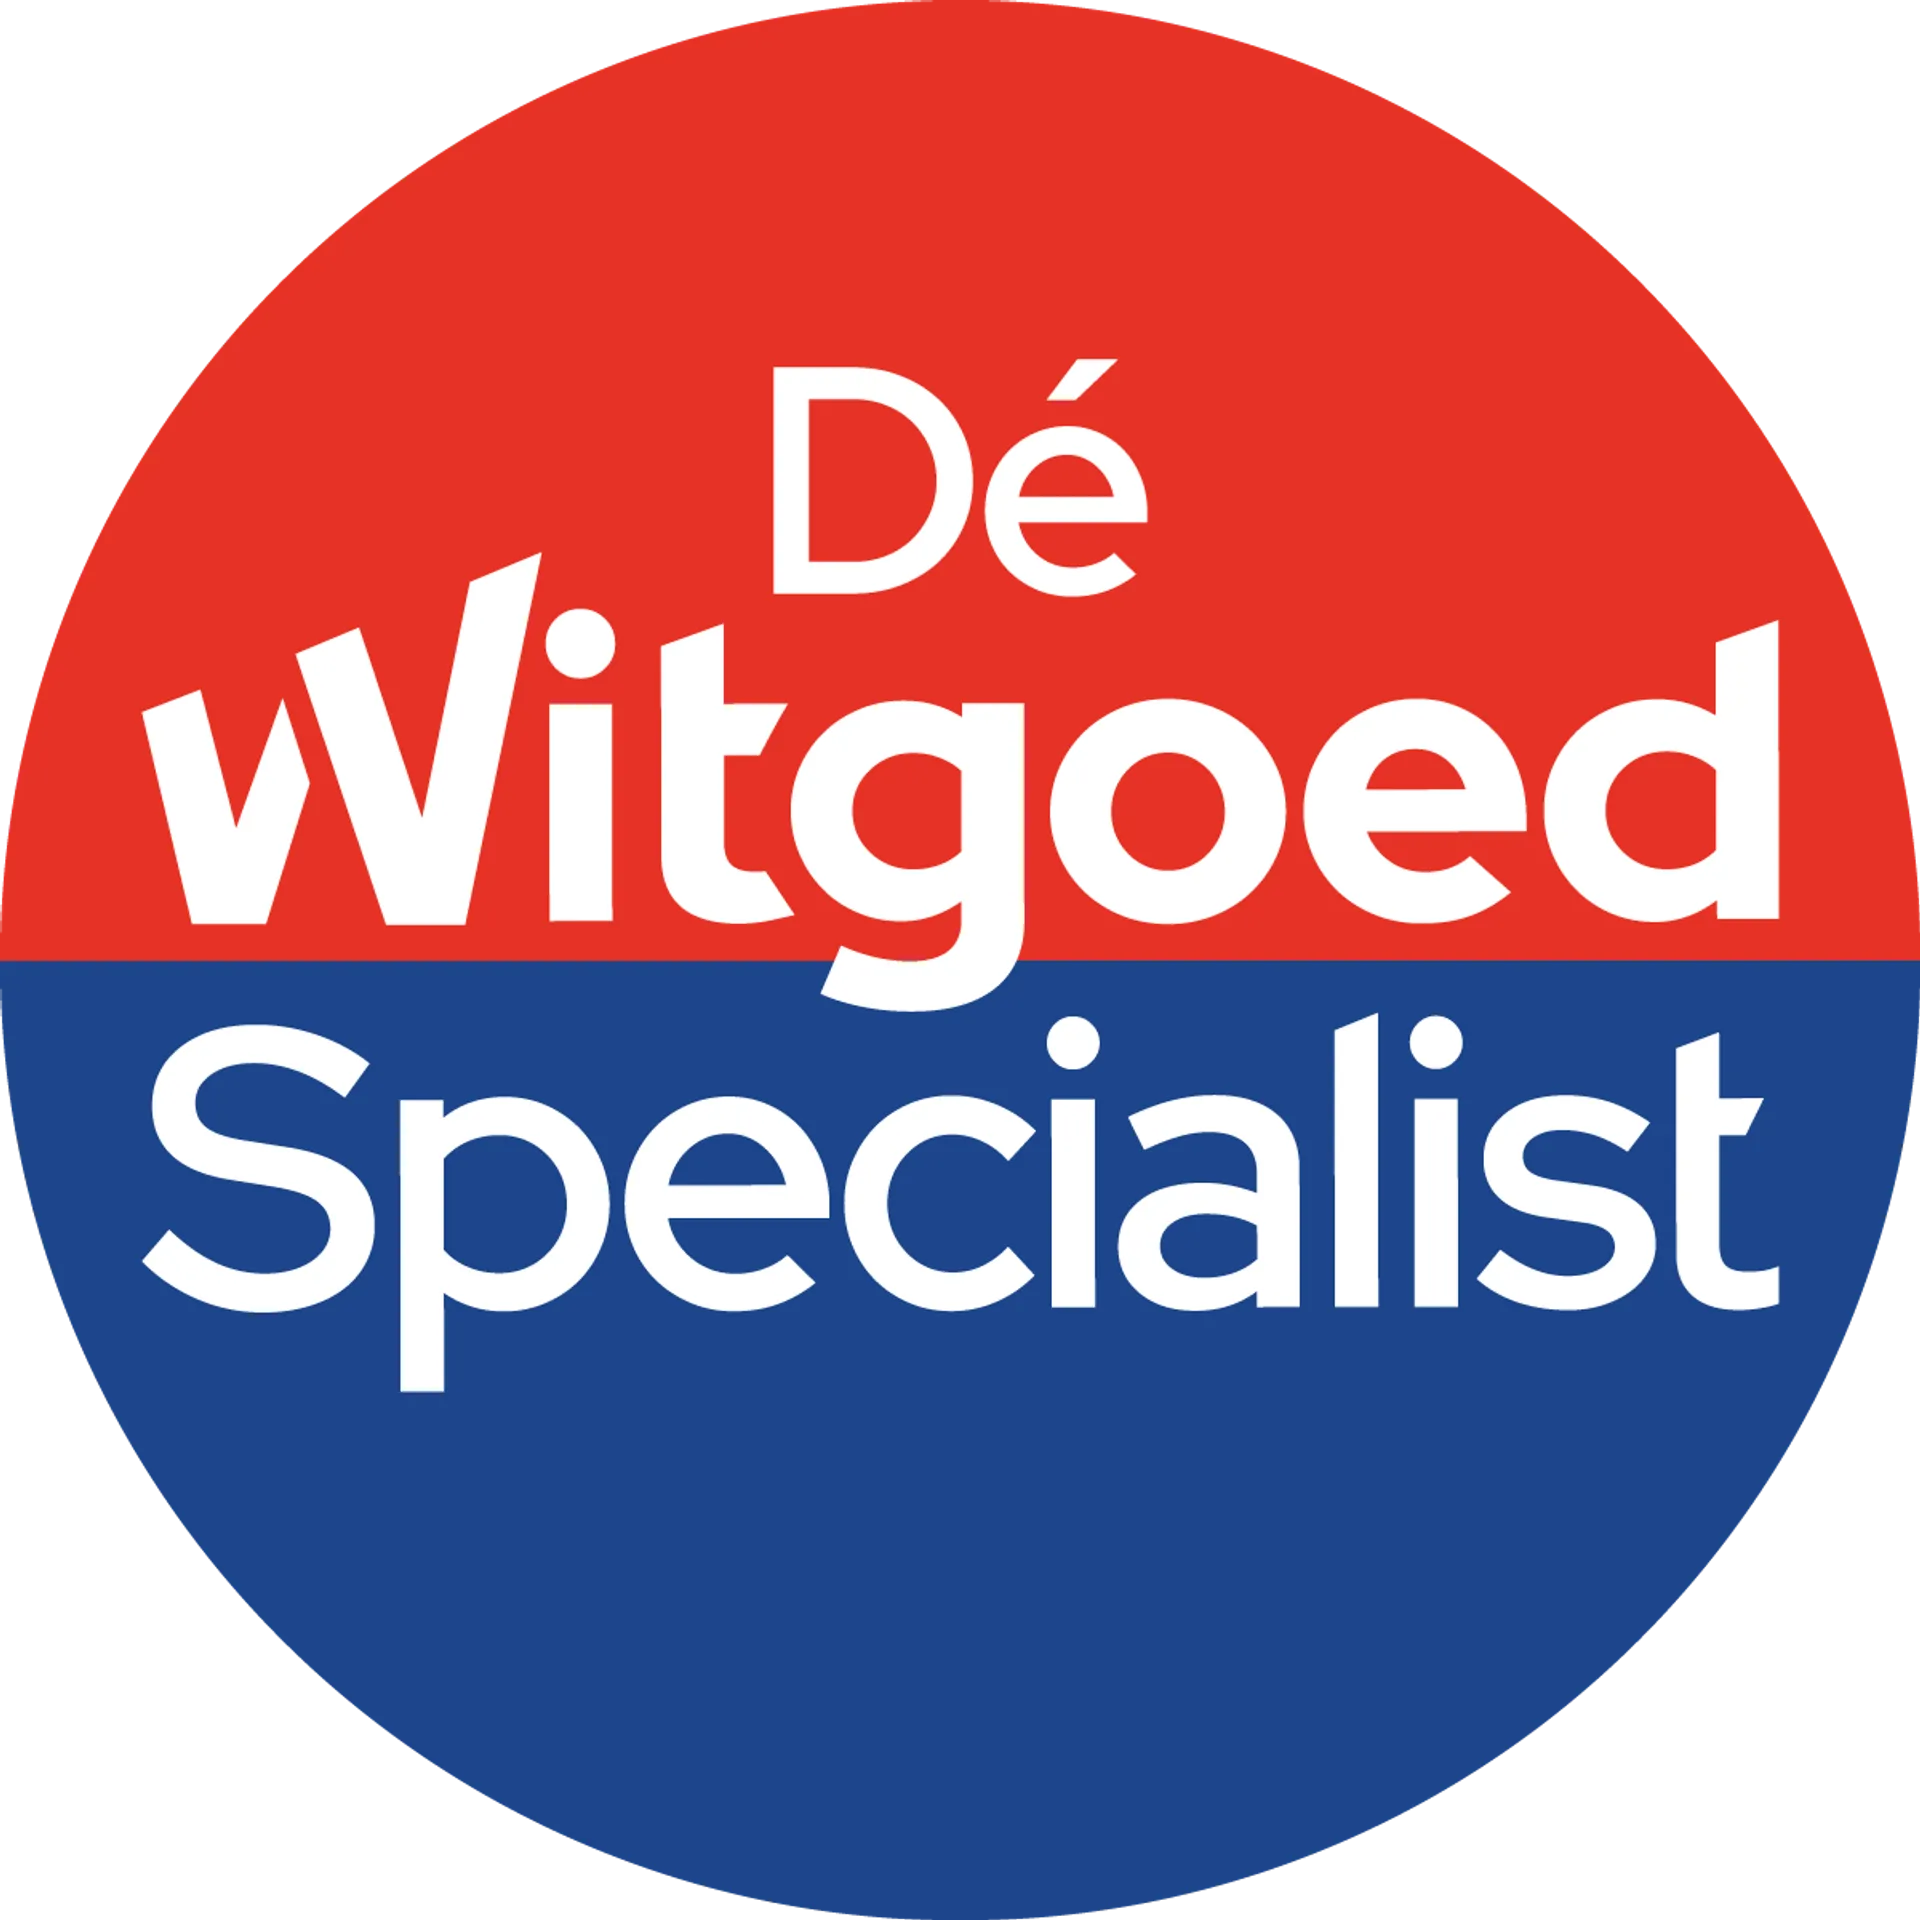 WITGOED SPECIALIST logo